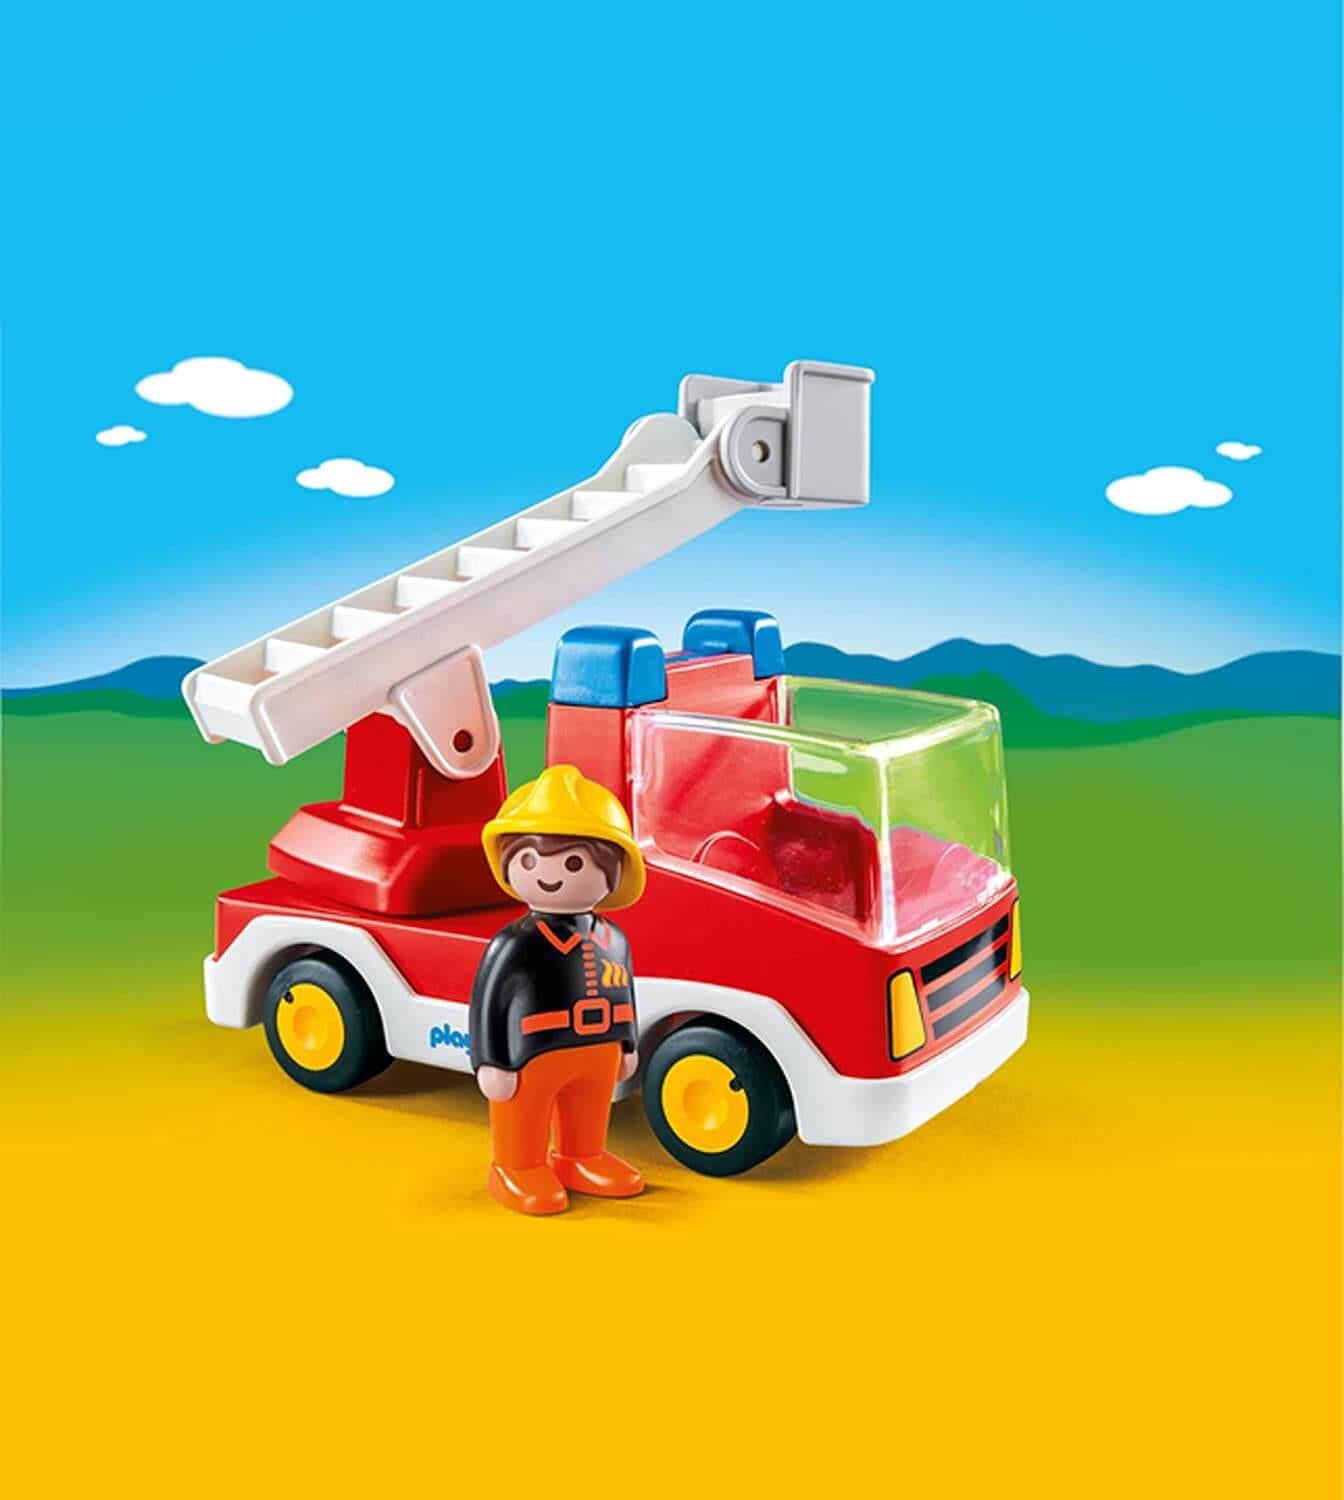 Playmobil 1.2.3 6967 Ladder Unit Fire Truck